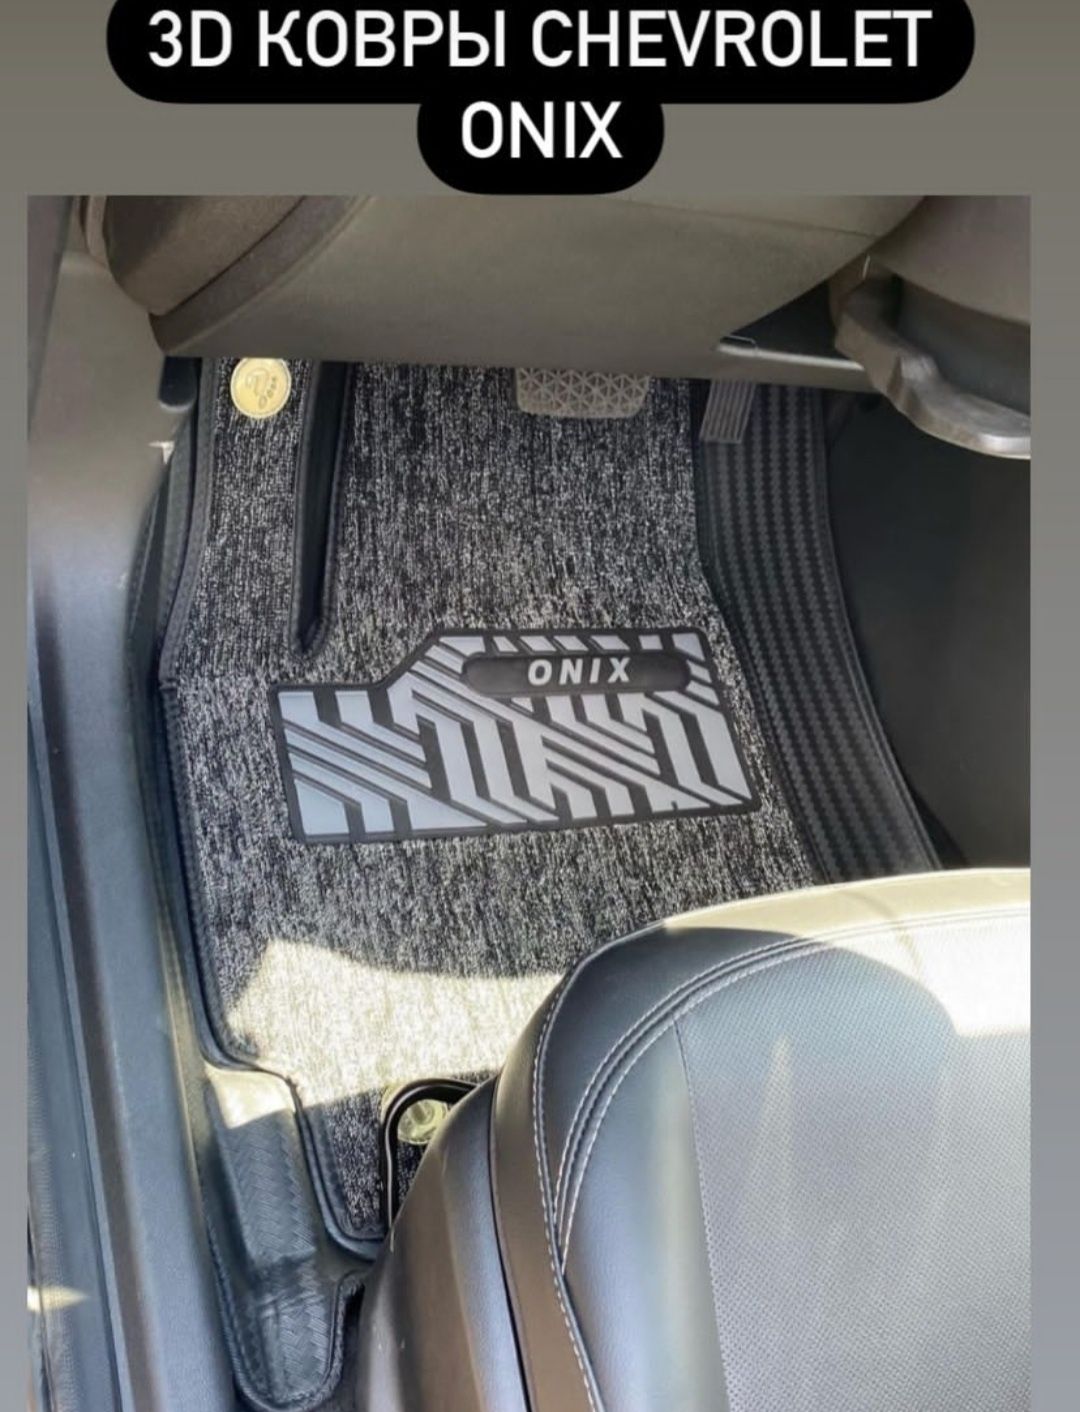 Chevrolet onix оникс ева коврики 3д полики в салон багажник ветровики